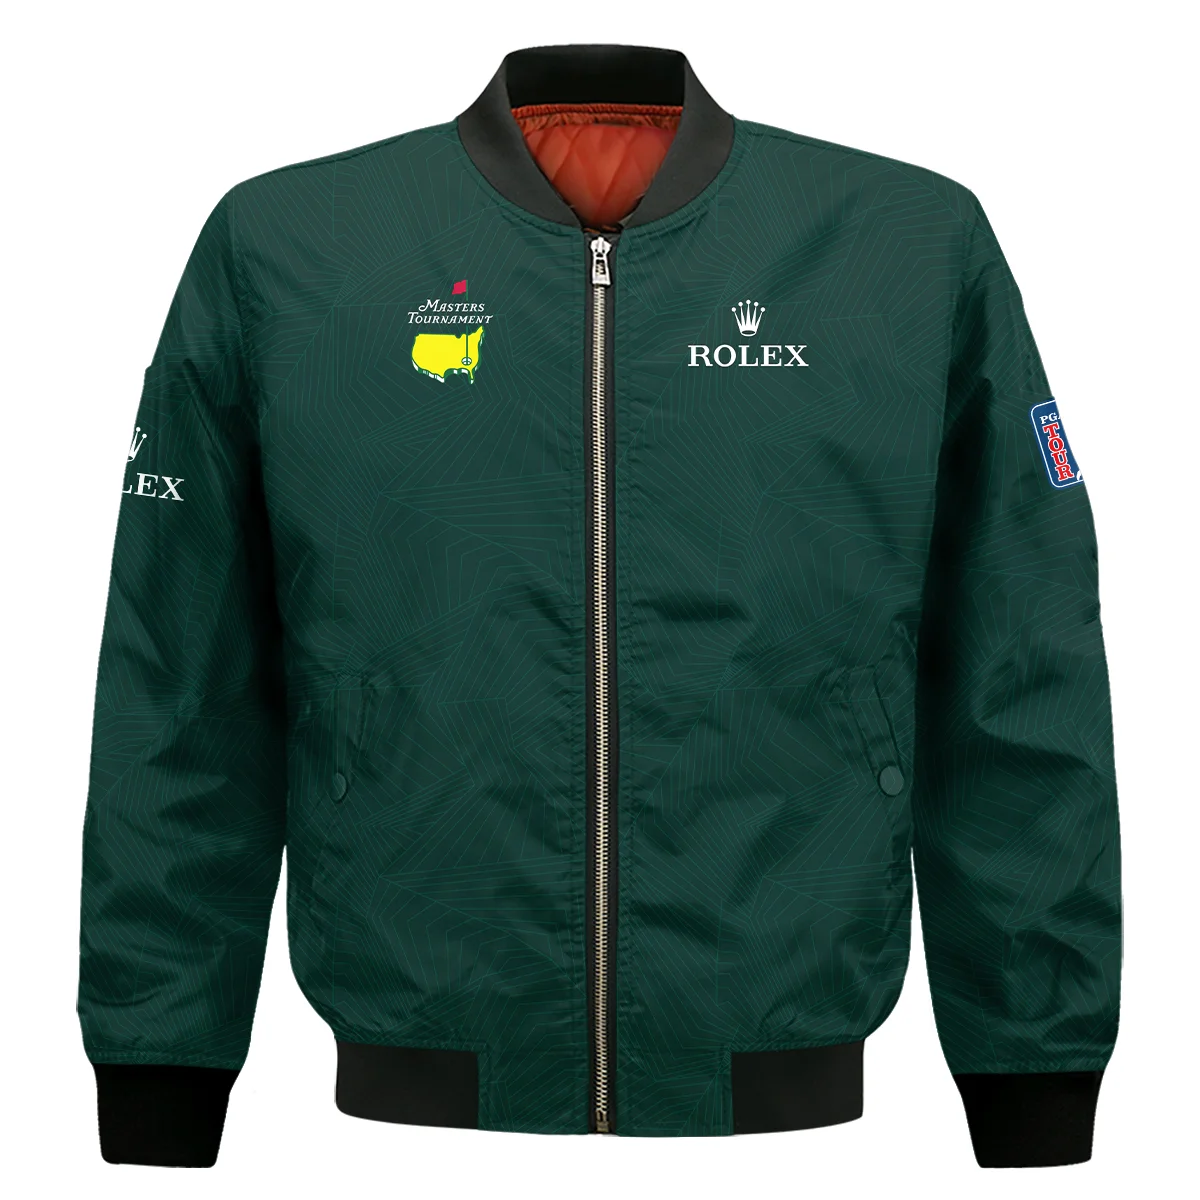 Masters Tournament Rolex Pattern Sport Jersey Dark Green Unisex Sweatshirt Style Classic Sweatshirt